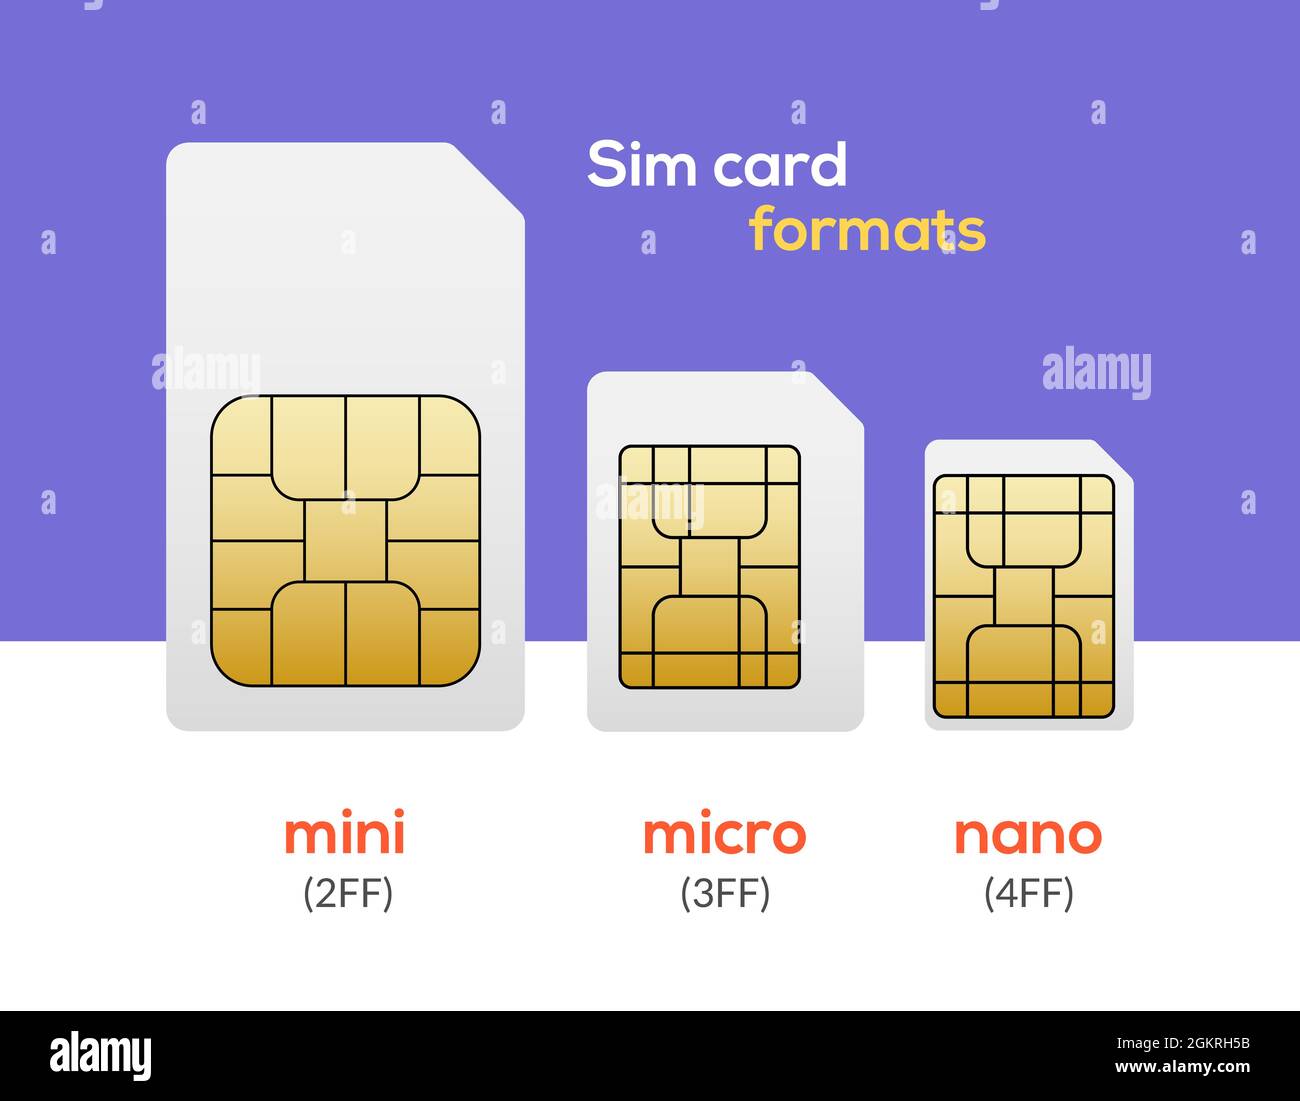 What Is a Nano SIM Card? - Simify